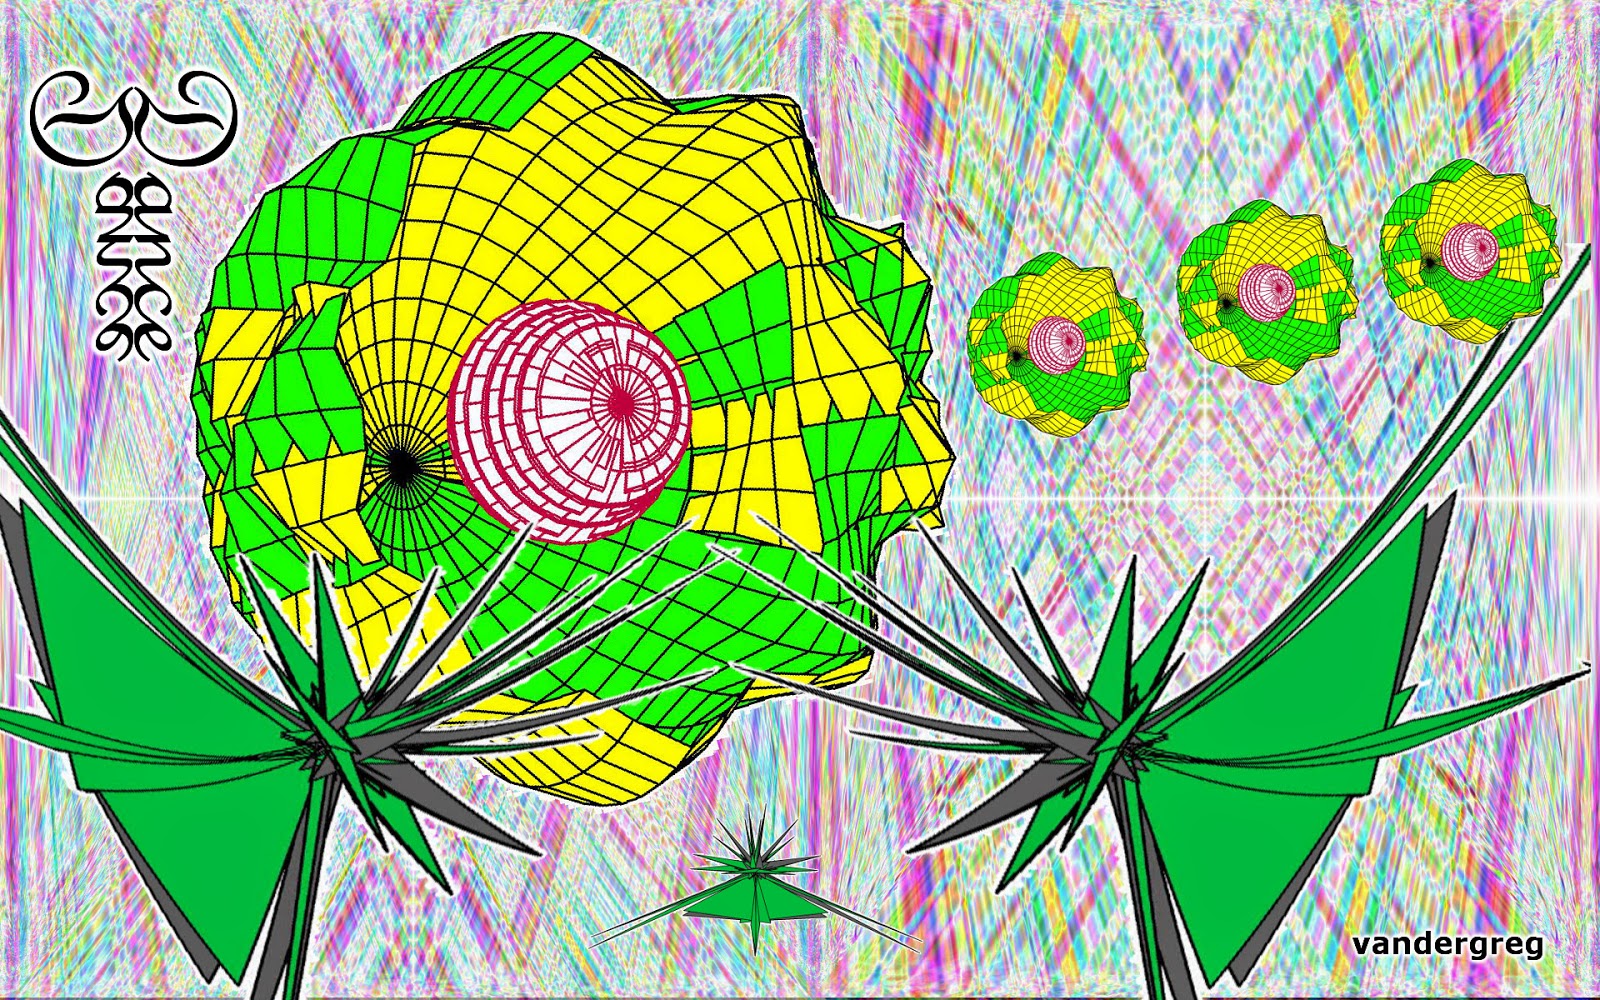 psychedelic art by gvan42 - Gregory Vanderlaan - Cosmic Mushroom Visions and Silly Eye Candy!